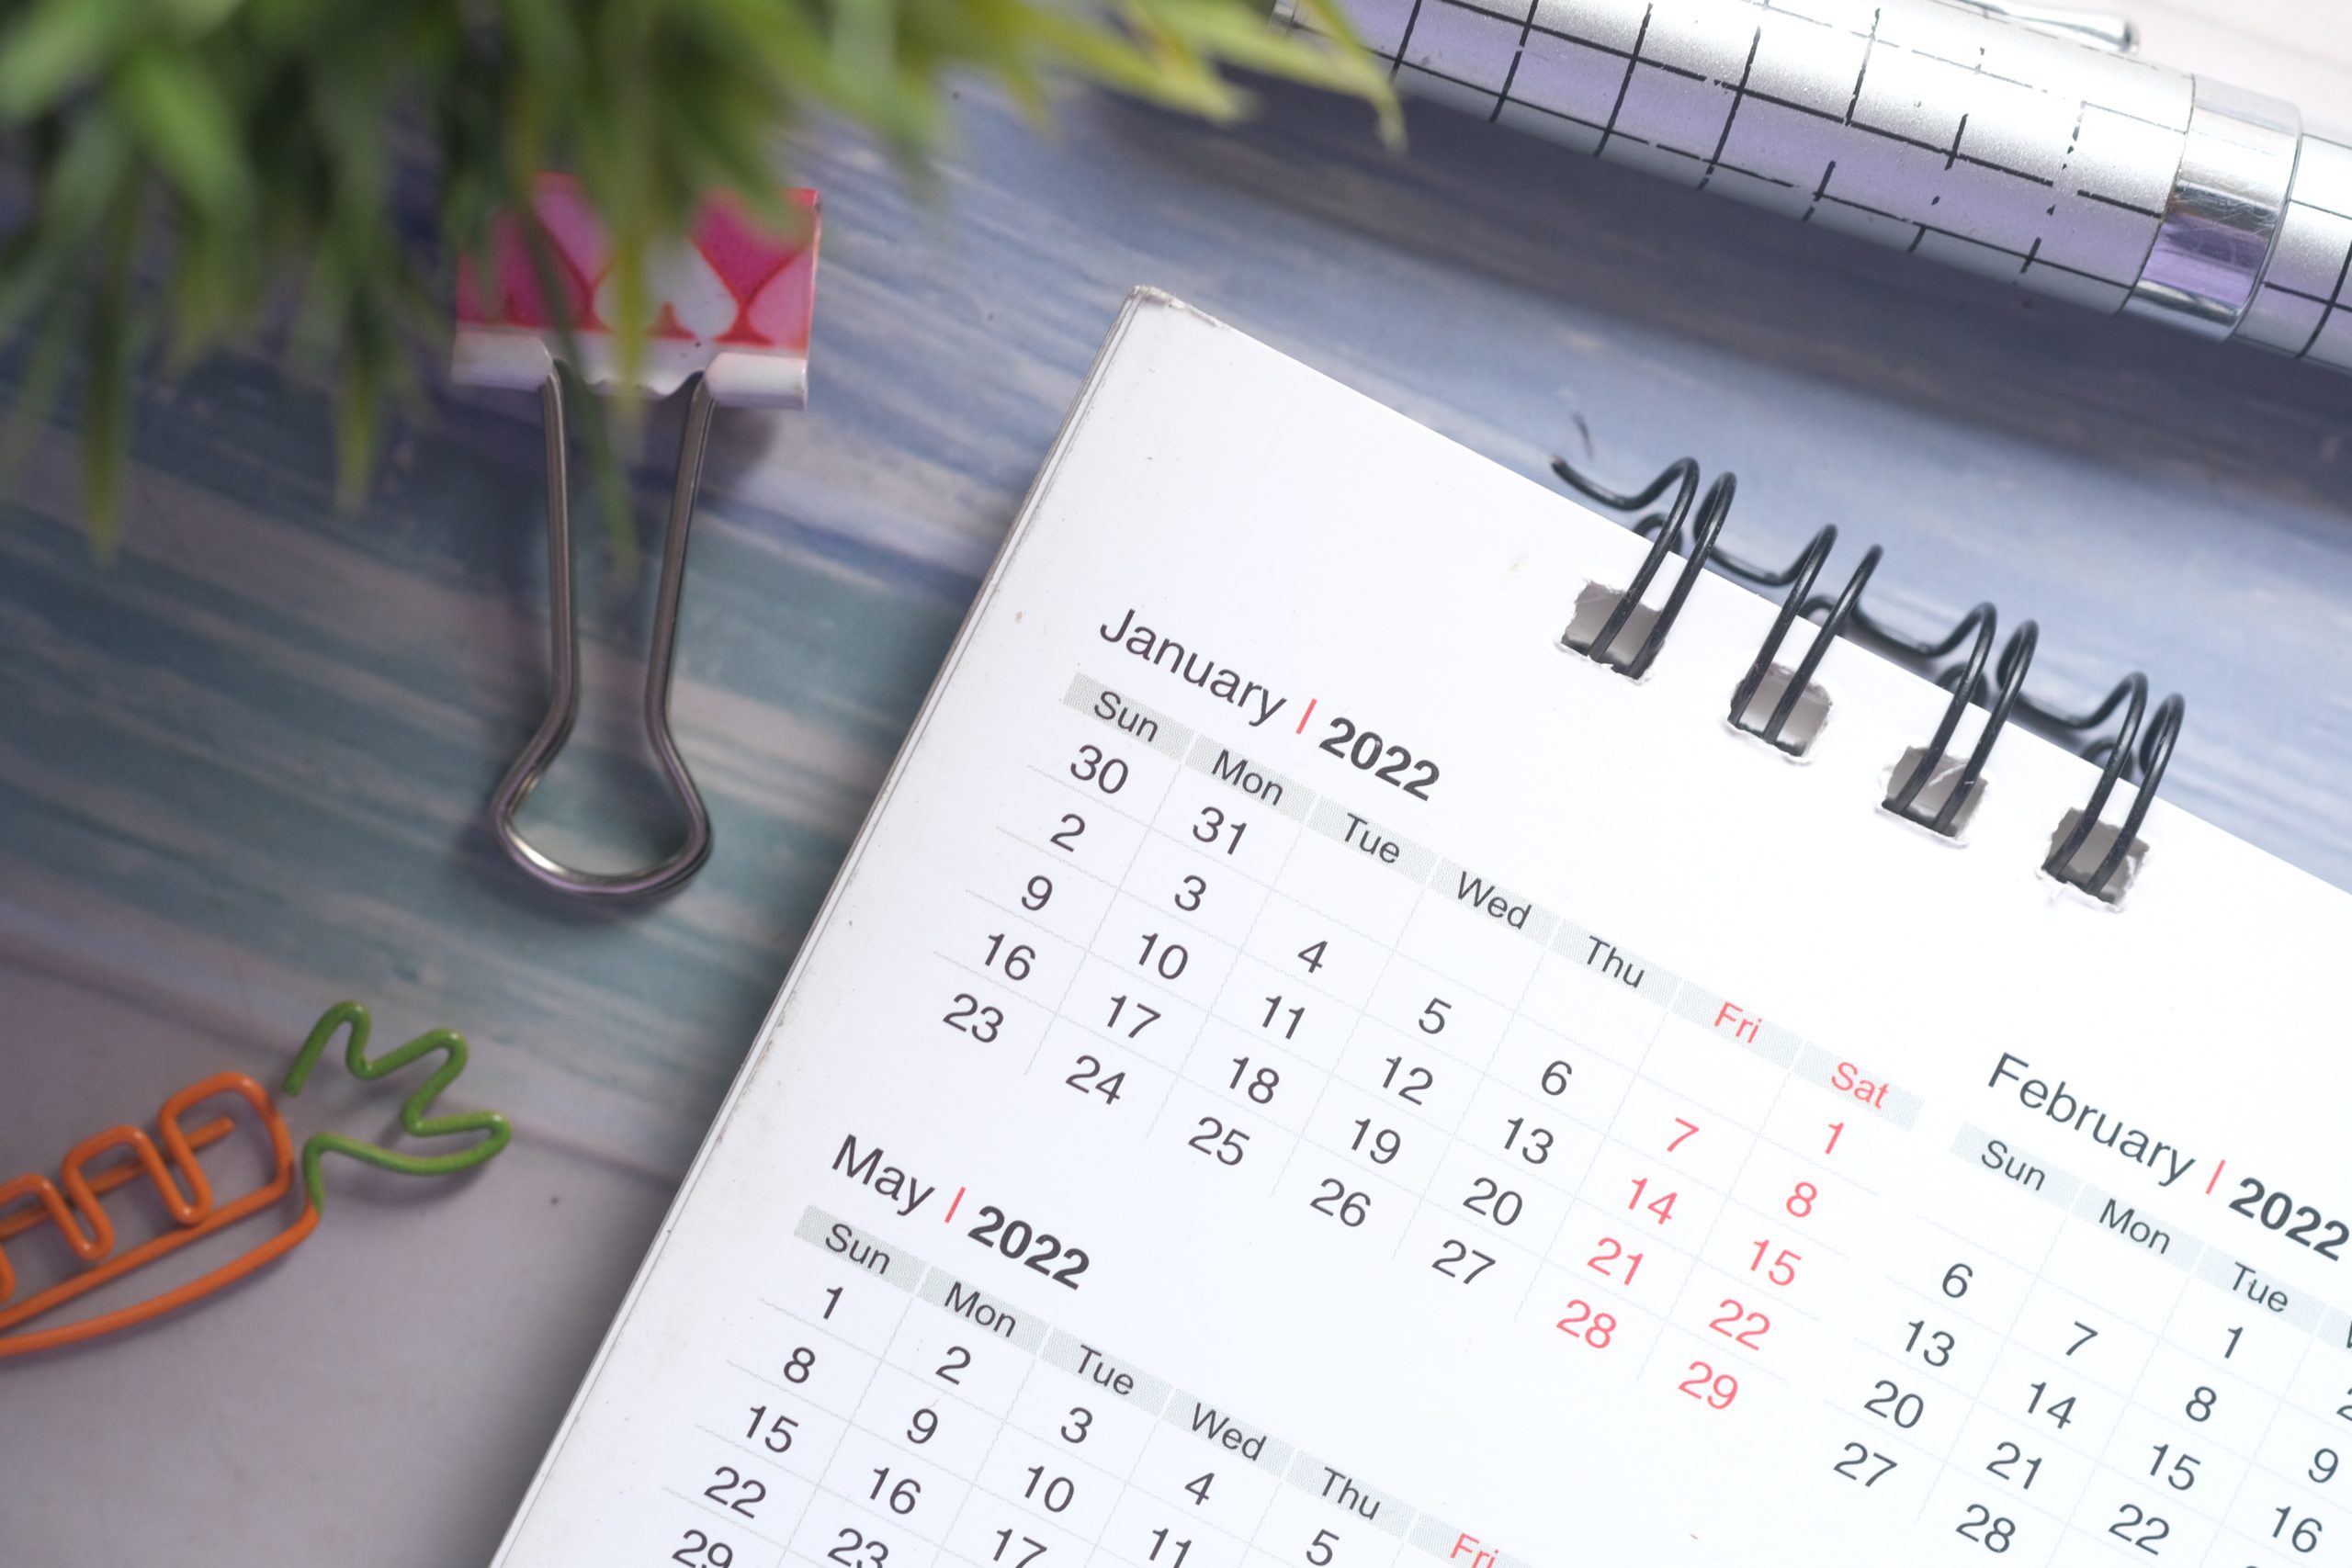 Desk calendar showing 2022 dates